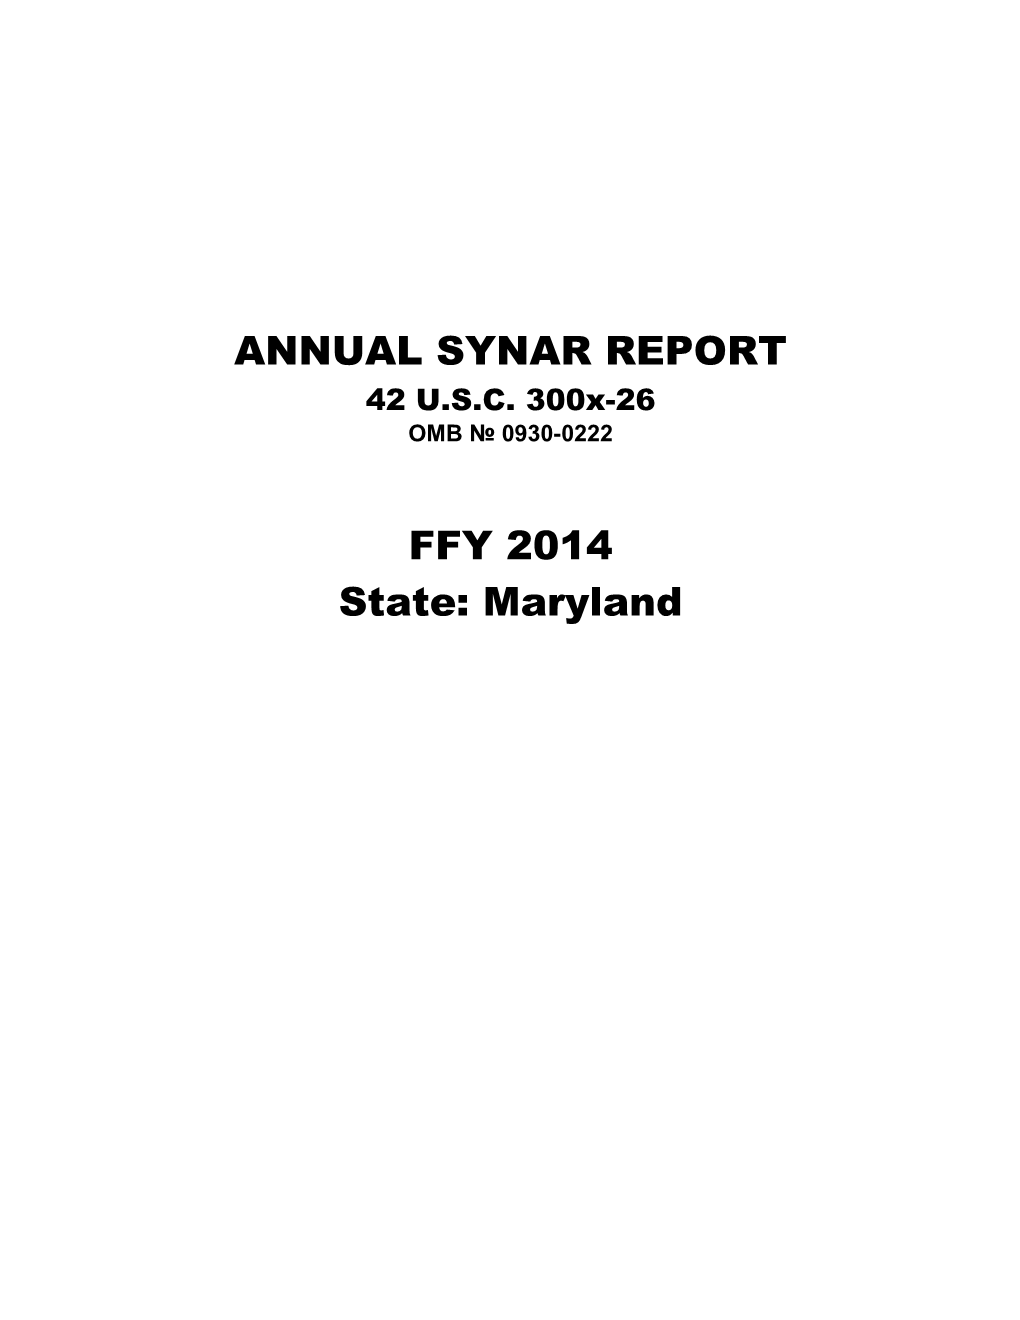 Annual Synar Report